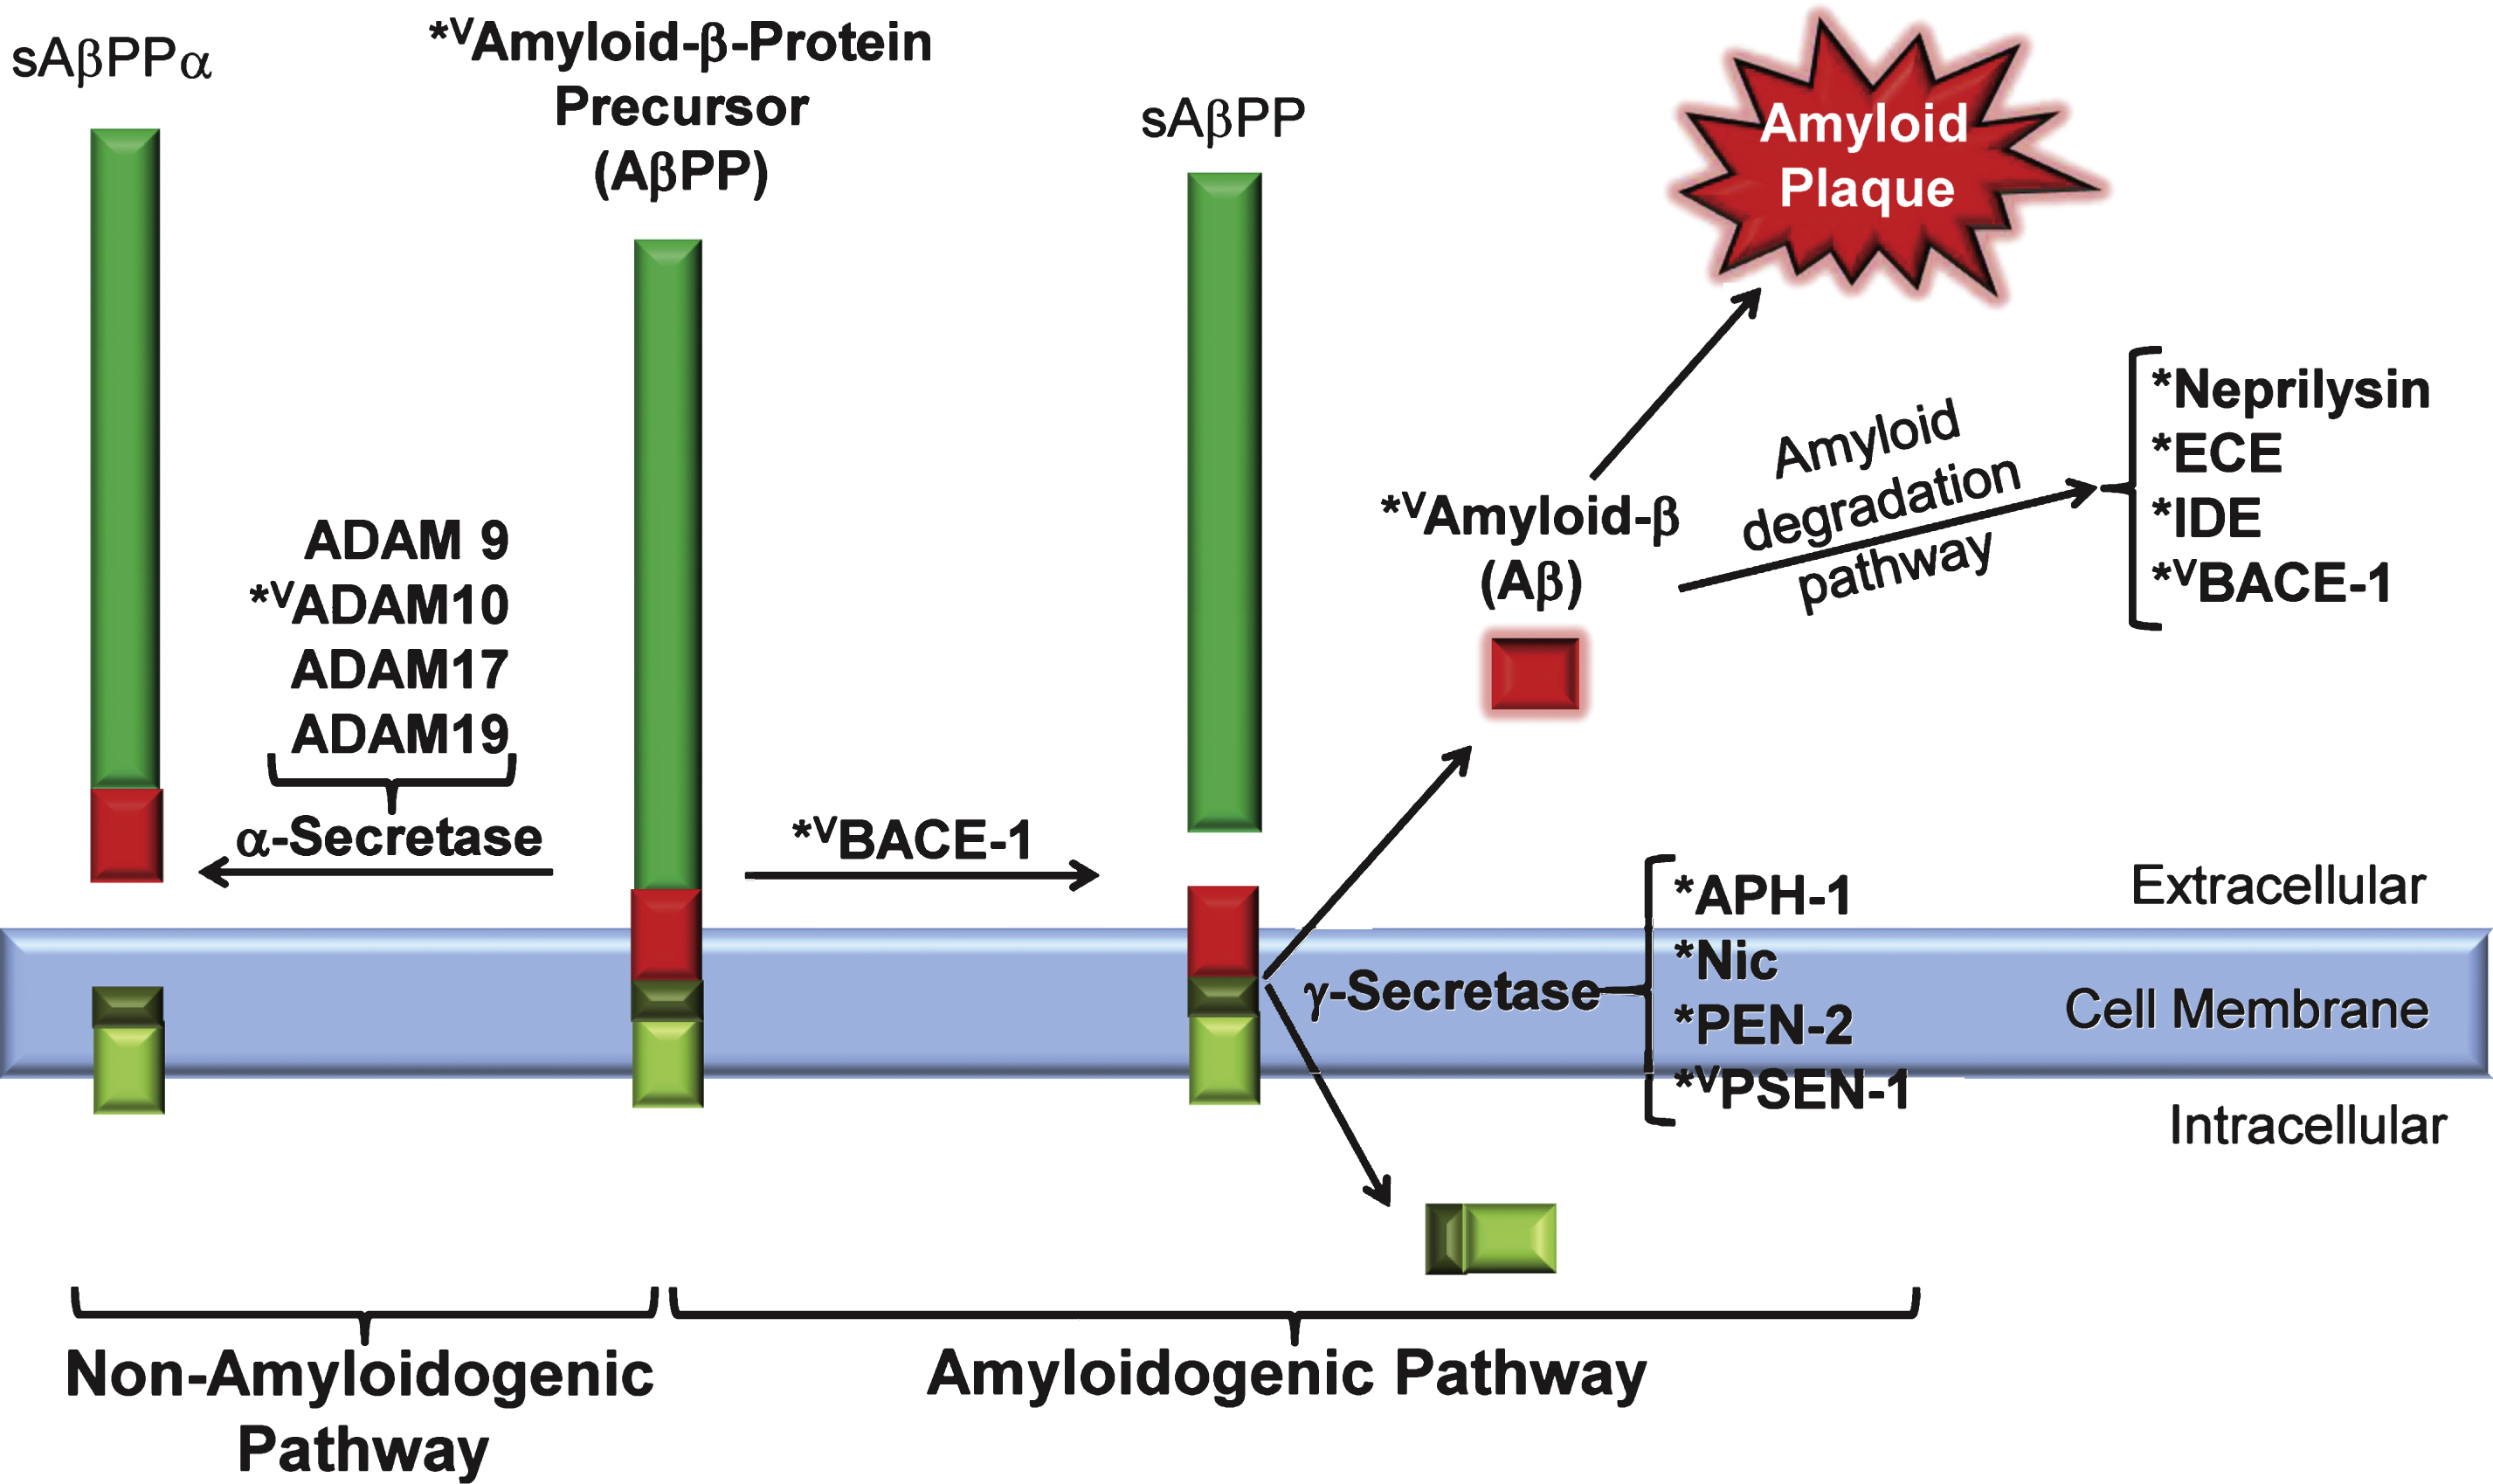 Calmodulin binding proteins linked to the amyloidogenenic and non-amyloidogenic pathways. amyloid-β precursor protein (AβPP); anterior pharynx defective 1 (APH-1); β site-amyloid converting enzyme 1 or β-secretase (BACE1); A Disintegrin And Metalloproteinase Family (ADAM 9,10,17, 19); endothelin-converting enzyme (ECE); insulin-degrading enzyme (IDE); nicastrin (Nic); presenilin enhancer protein 2 (PEN-2); and presenilin-1 (PSN-1); superscripts:  *putative CaMBD detected; vCaMBD experimentally verified.